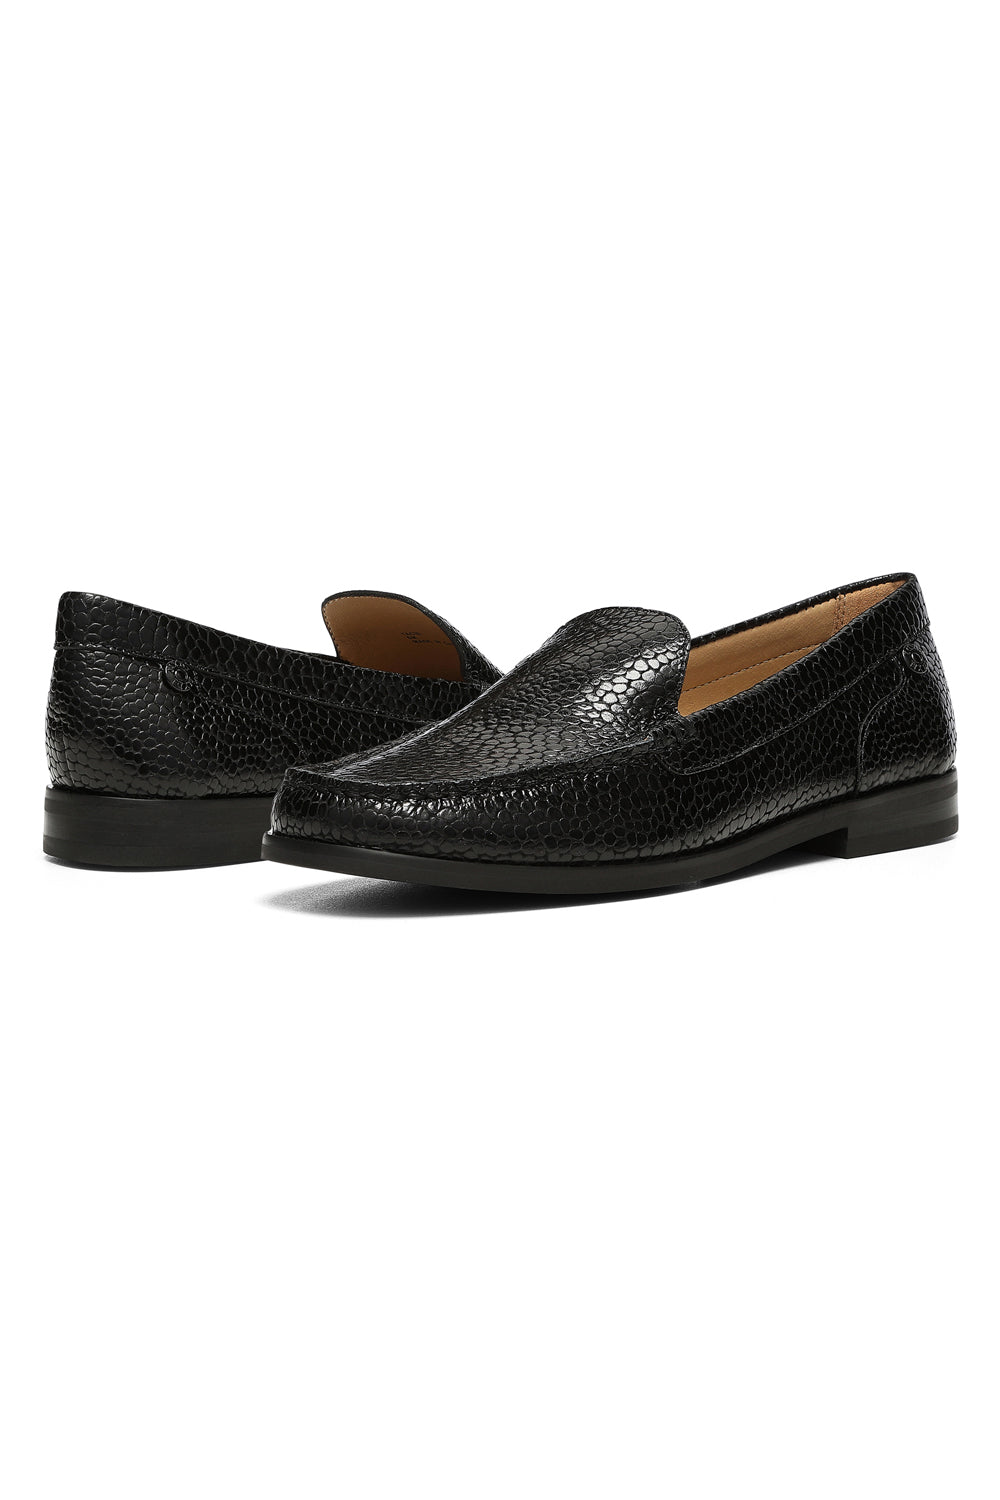 NYDJ Tacie Slip-On Loafers In Pebbled Metallic Leather - Black